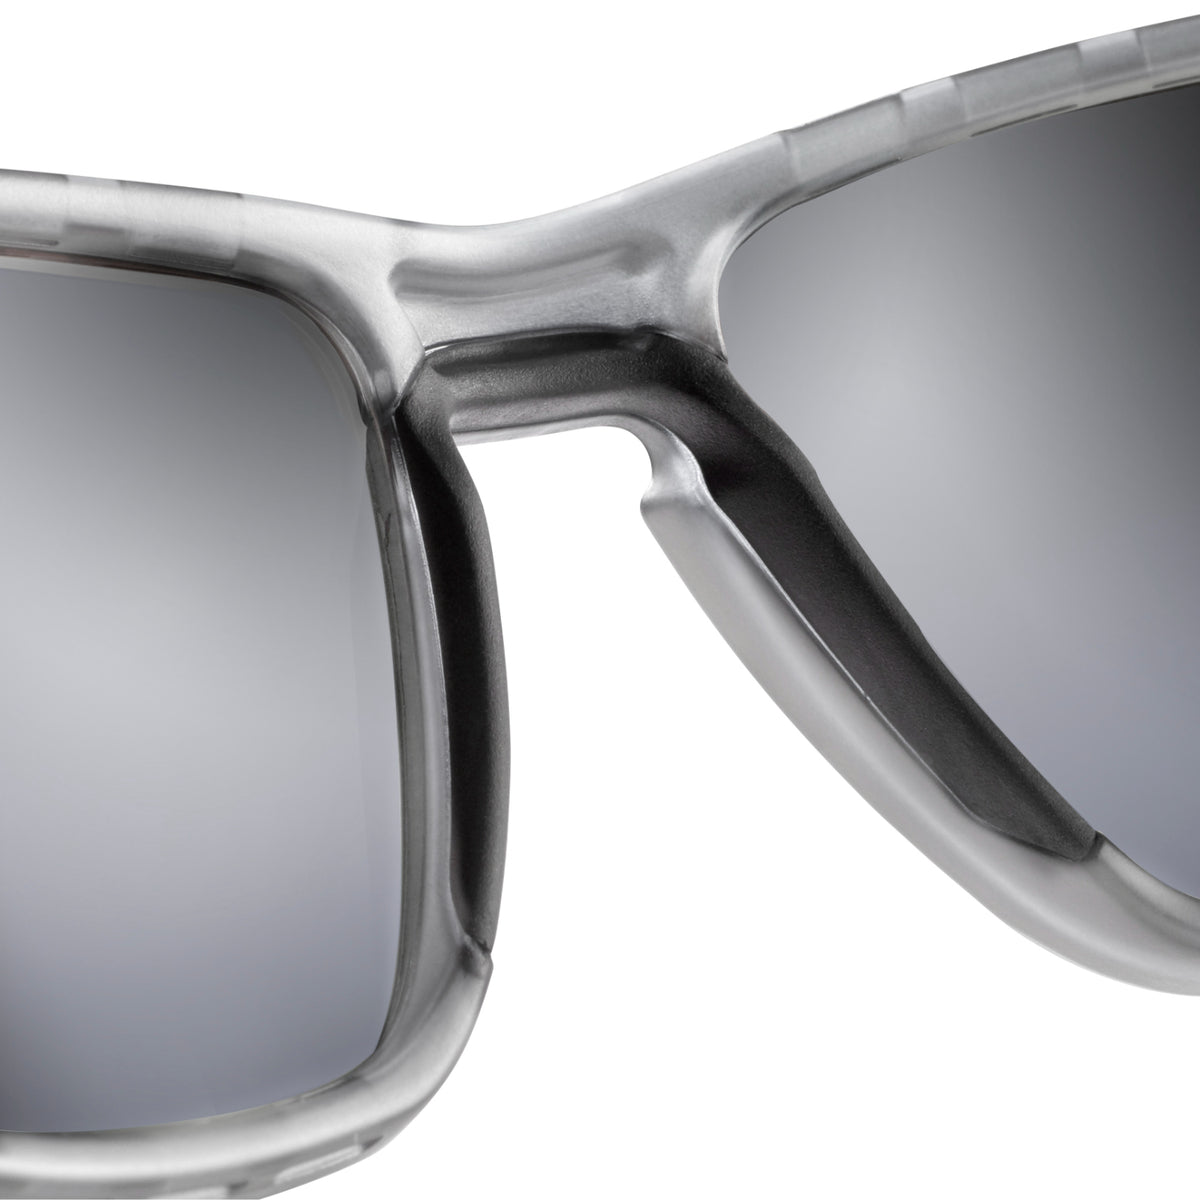 Julbo Shield SPECTRON 4 sunglasses in black